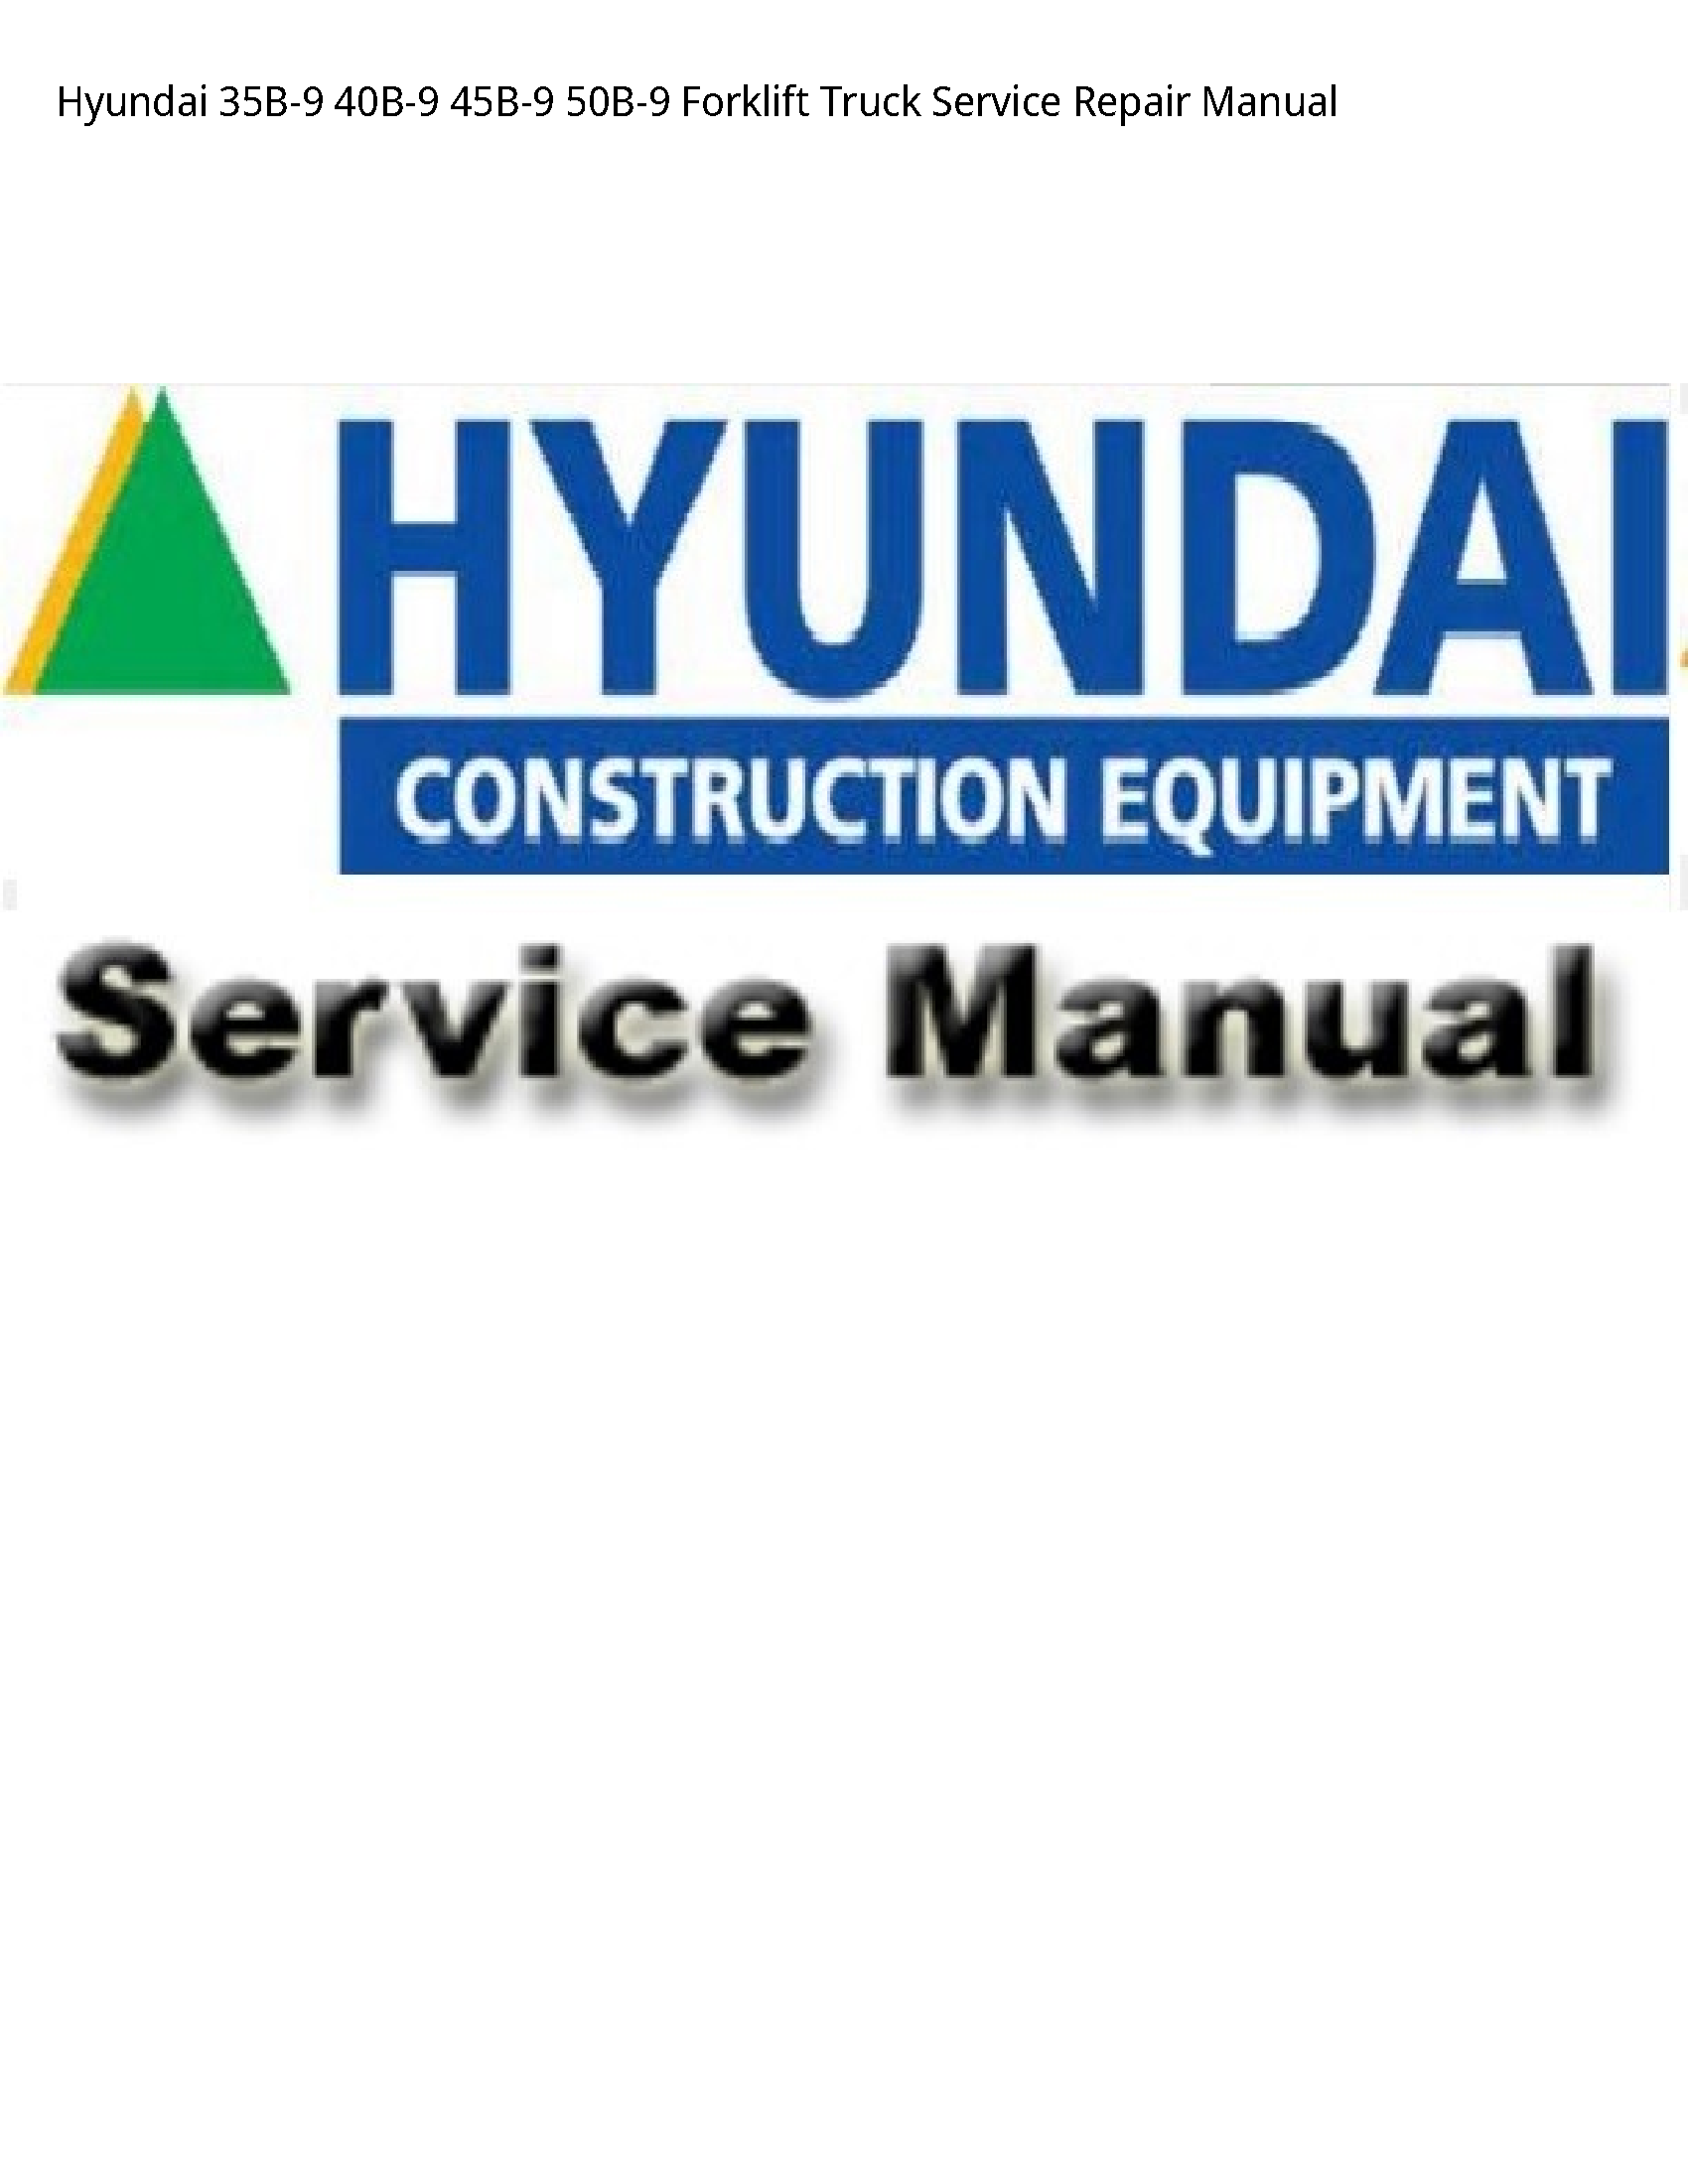 Hyundai 35B-9 Forklift Truck manual